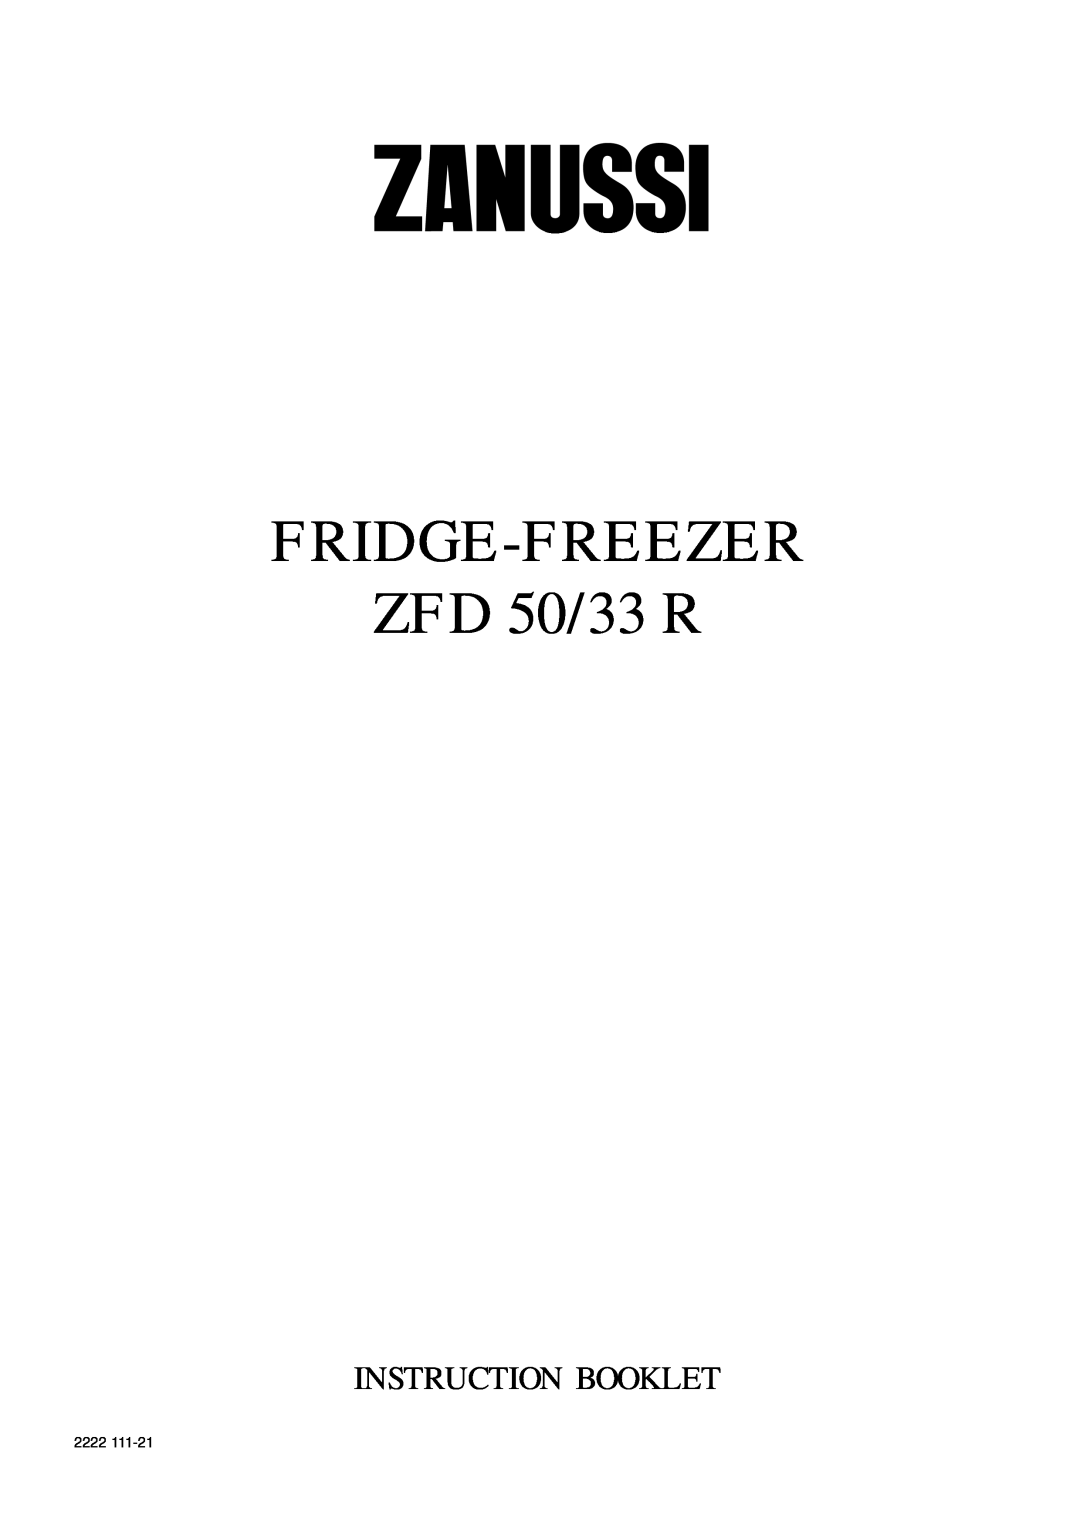 Zanussi manual FRIDGE-FREEZER ZFD 50/33 R, Instruction Booklet, 2222 